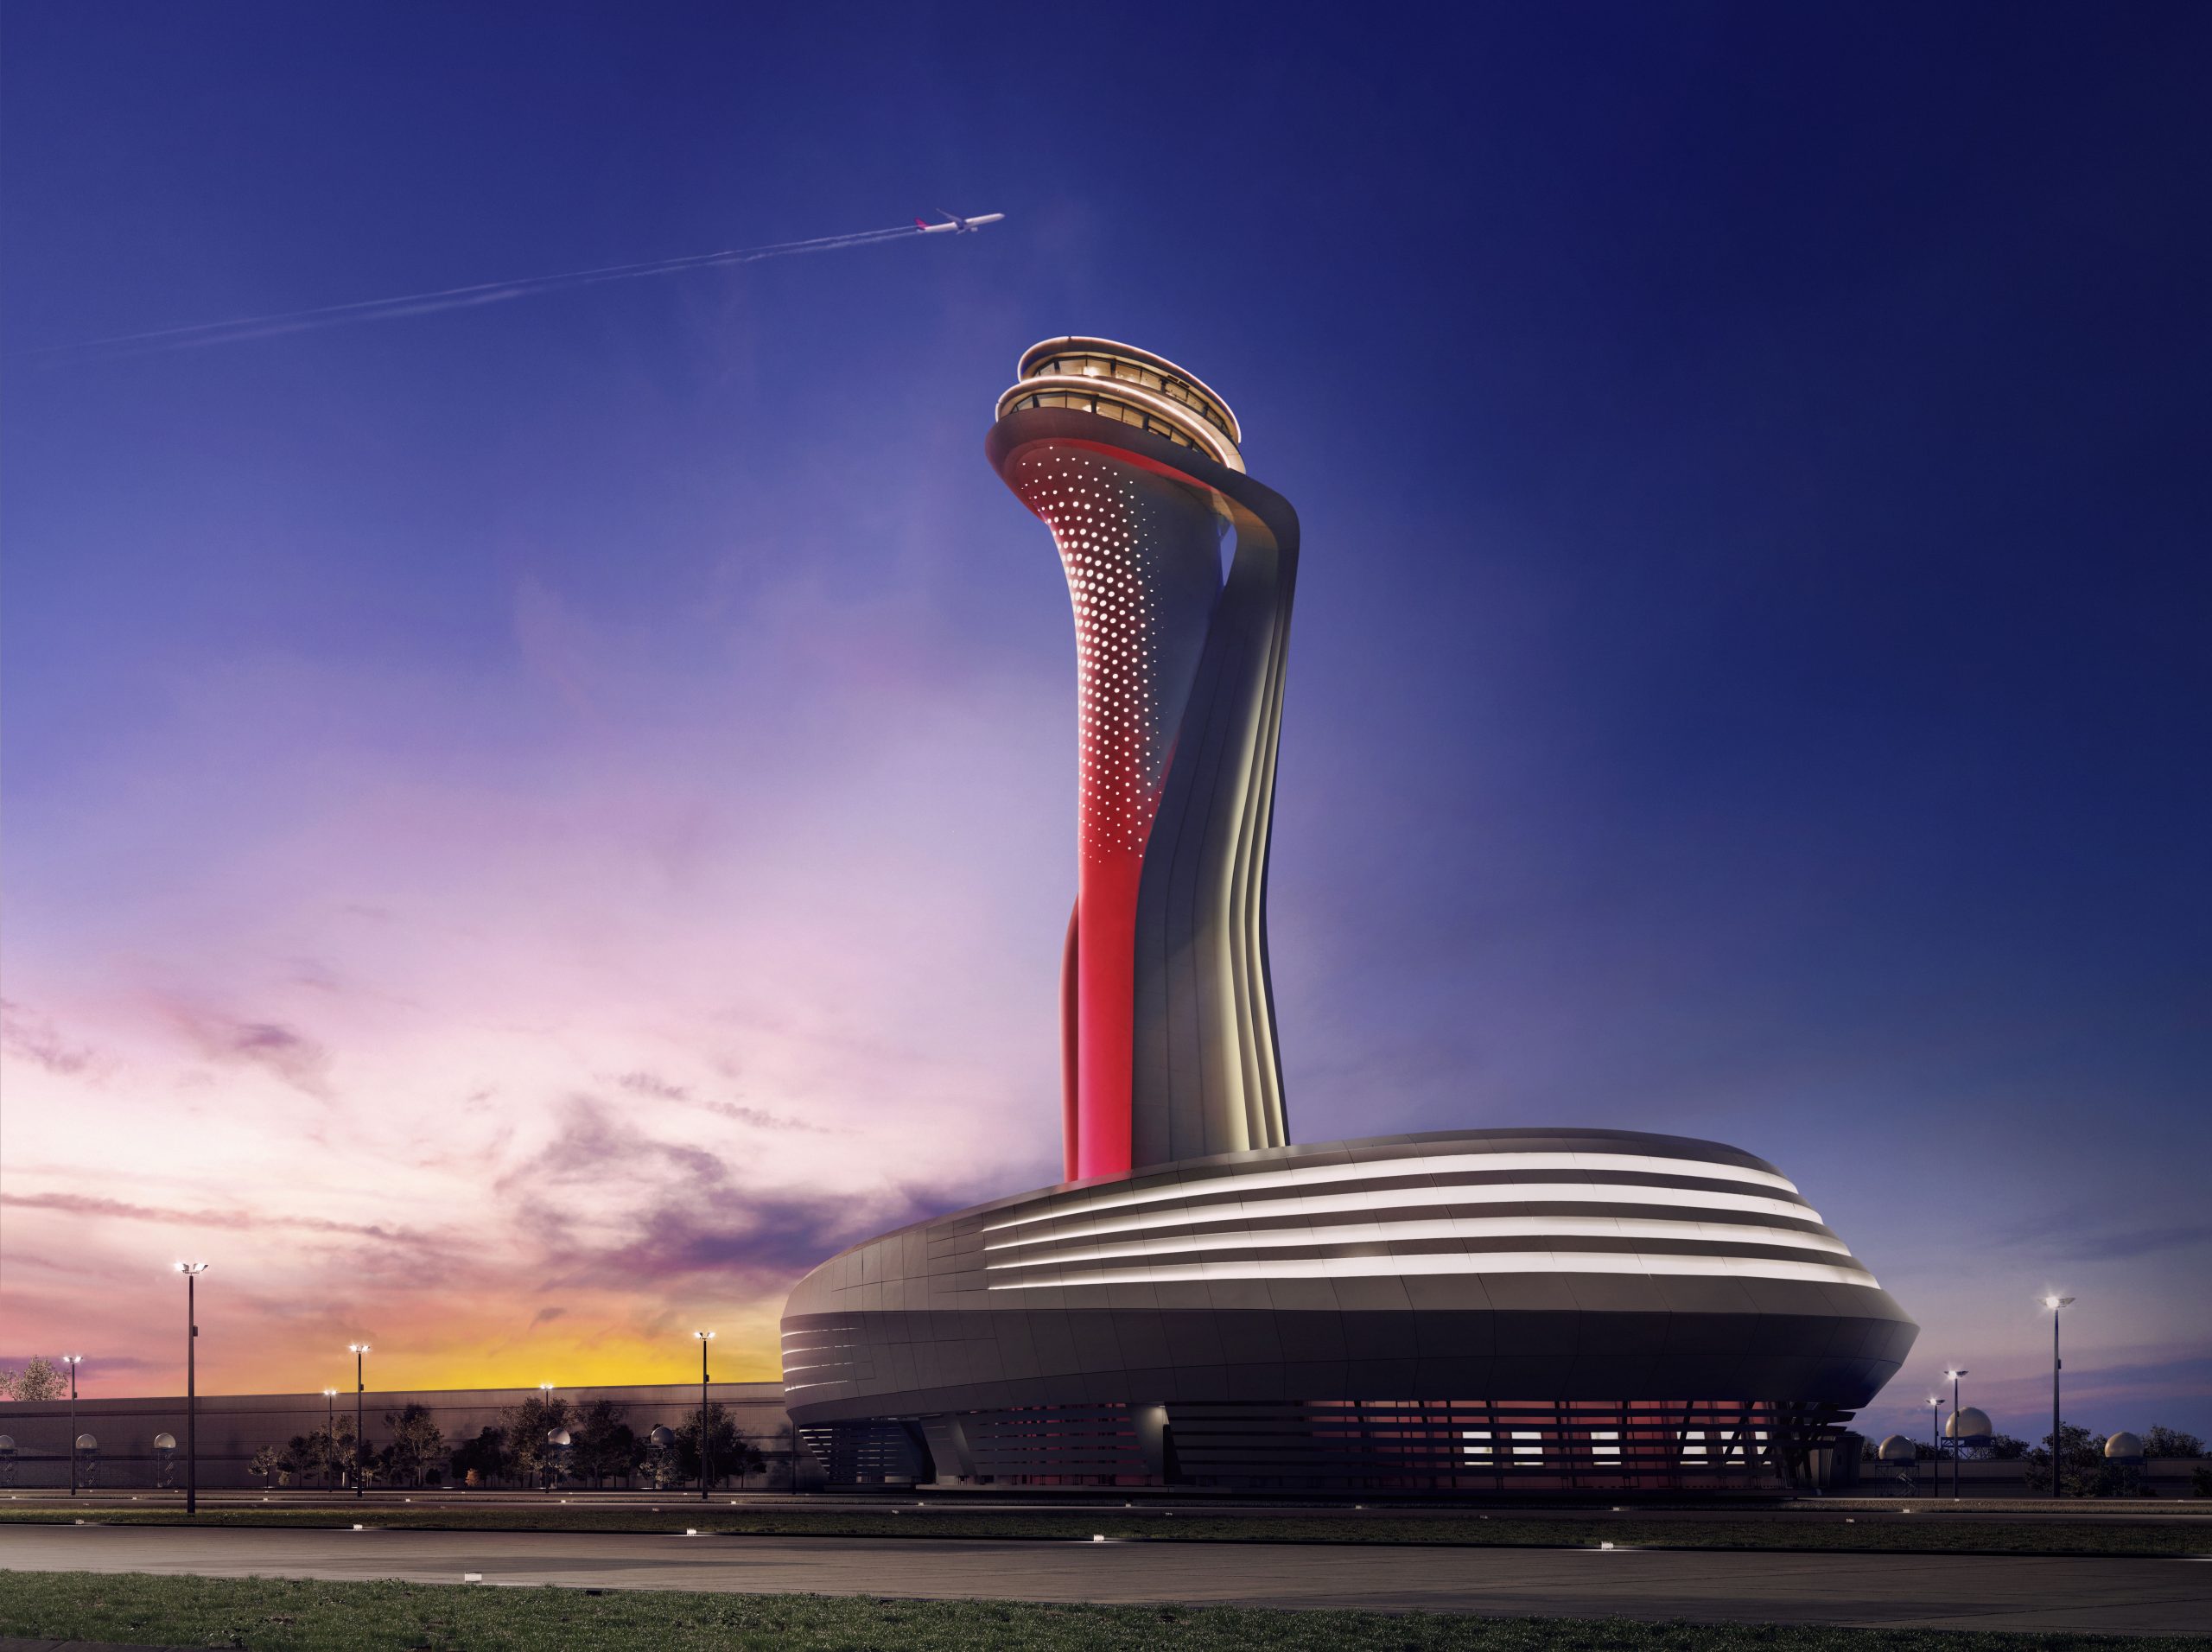 İGA İstanbul Airport atc tower